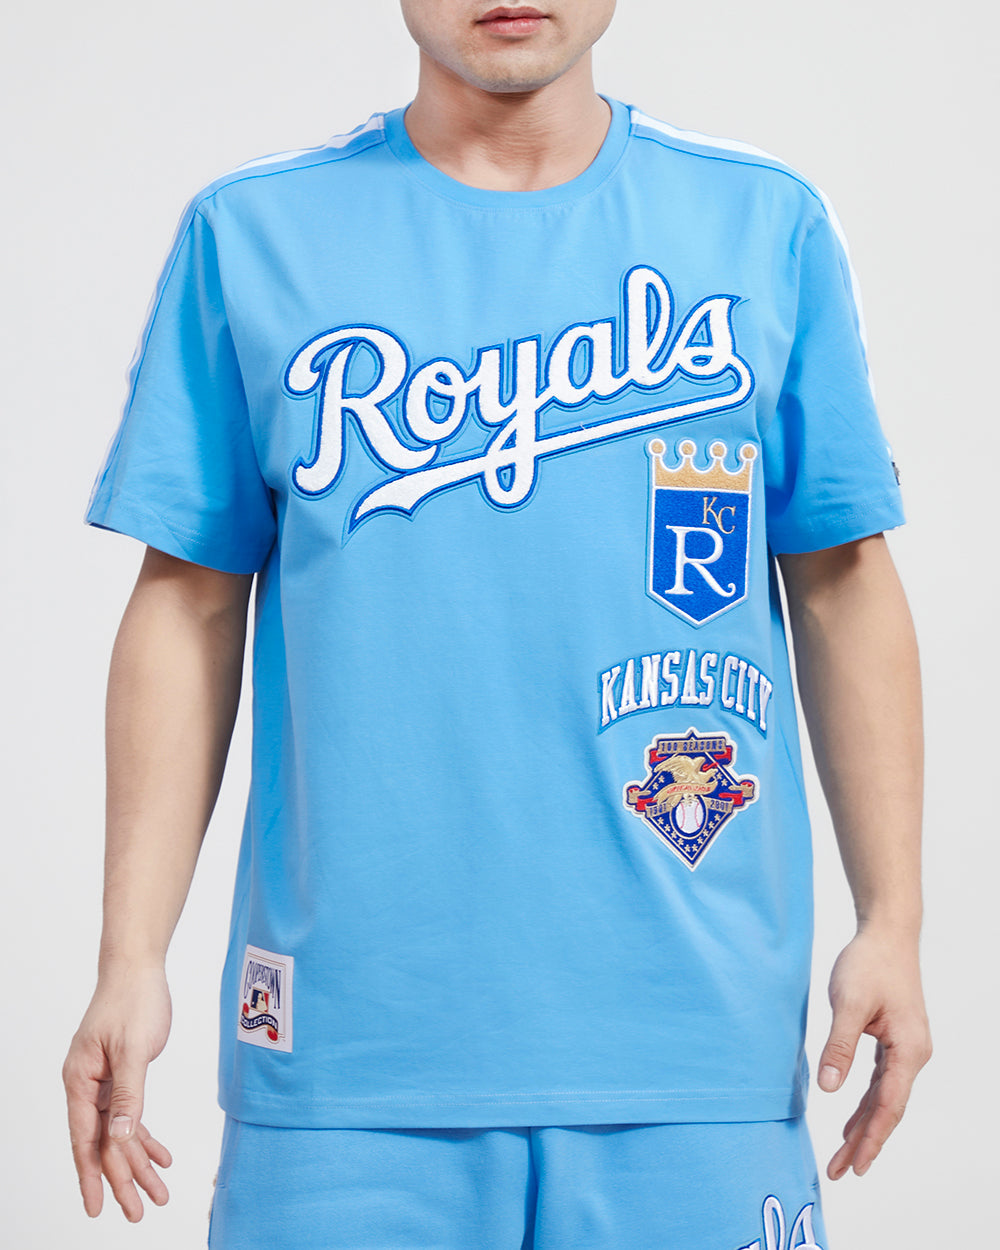 MLB KANSAS CITY ROYALS RETRO CLASSIC MEN'S STRIPED TOP (UNIVERSITY BLUE)